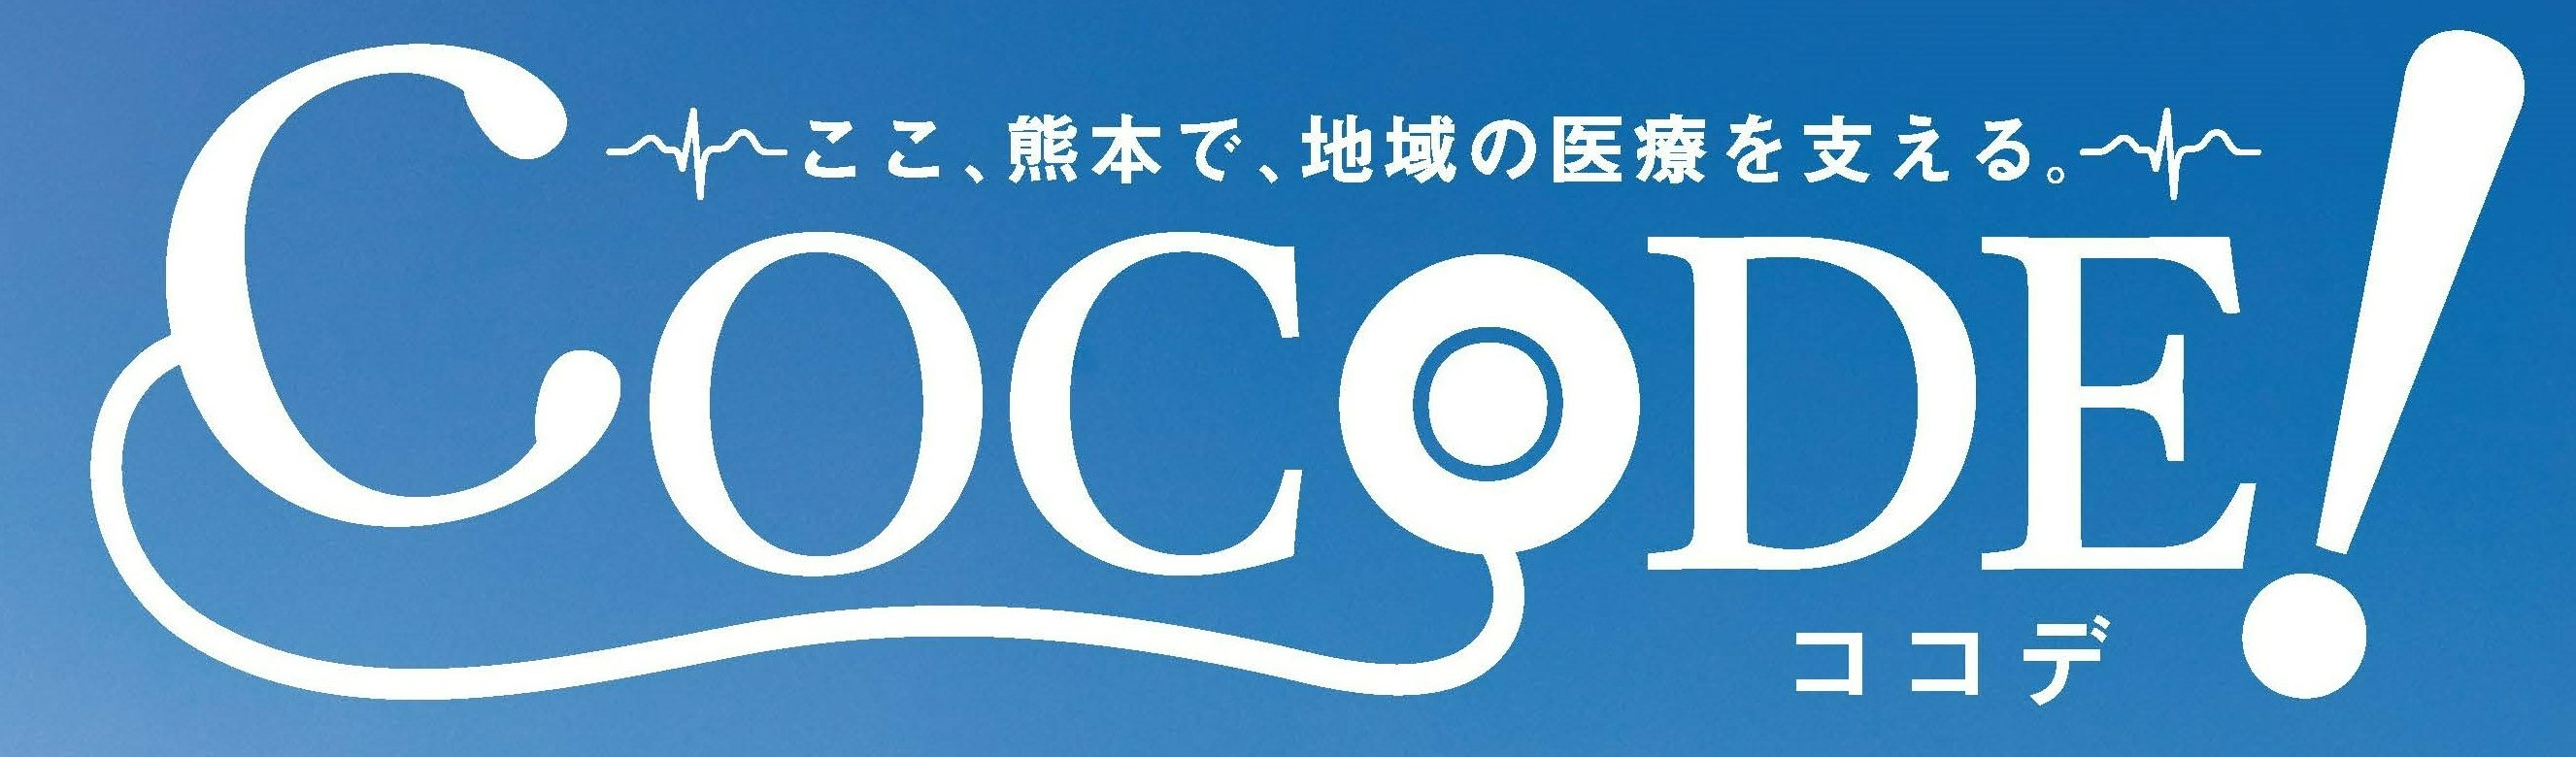 COCODE logo.jpg